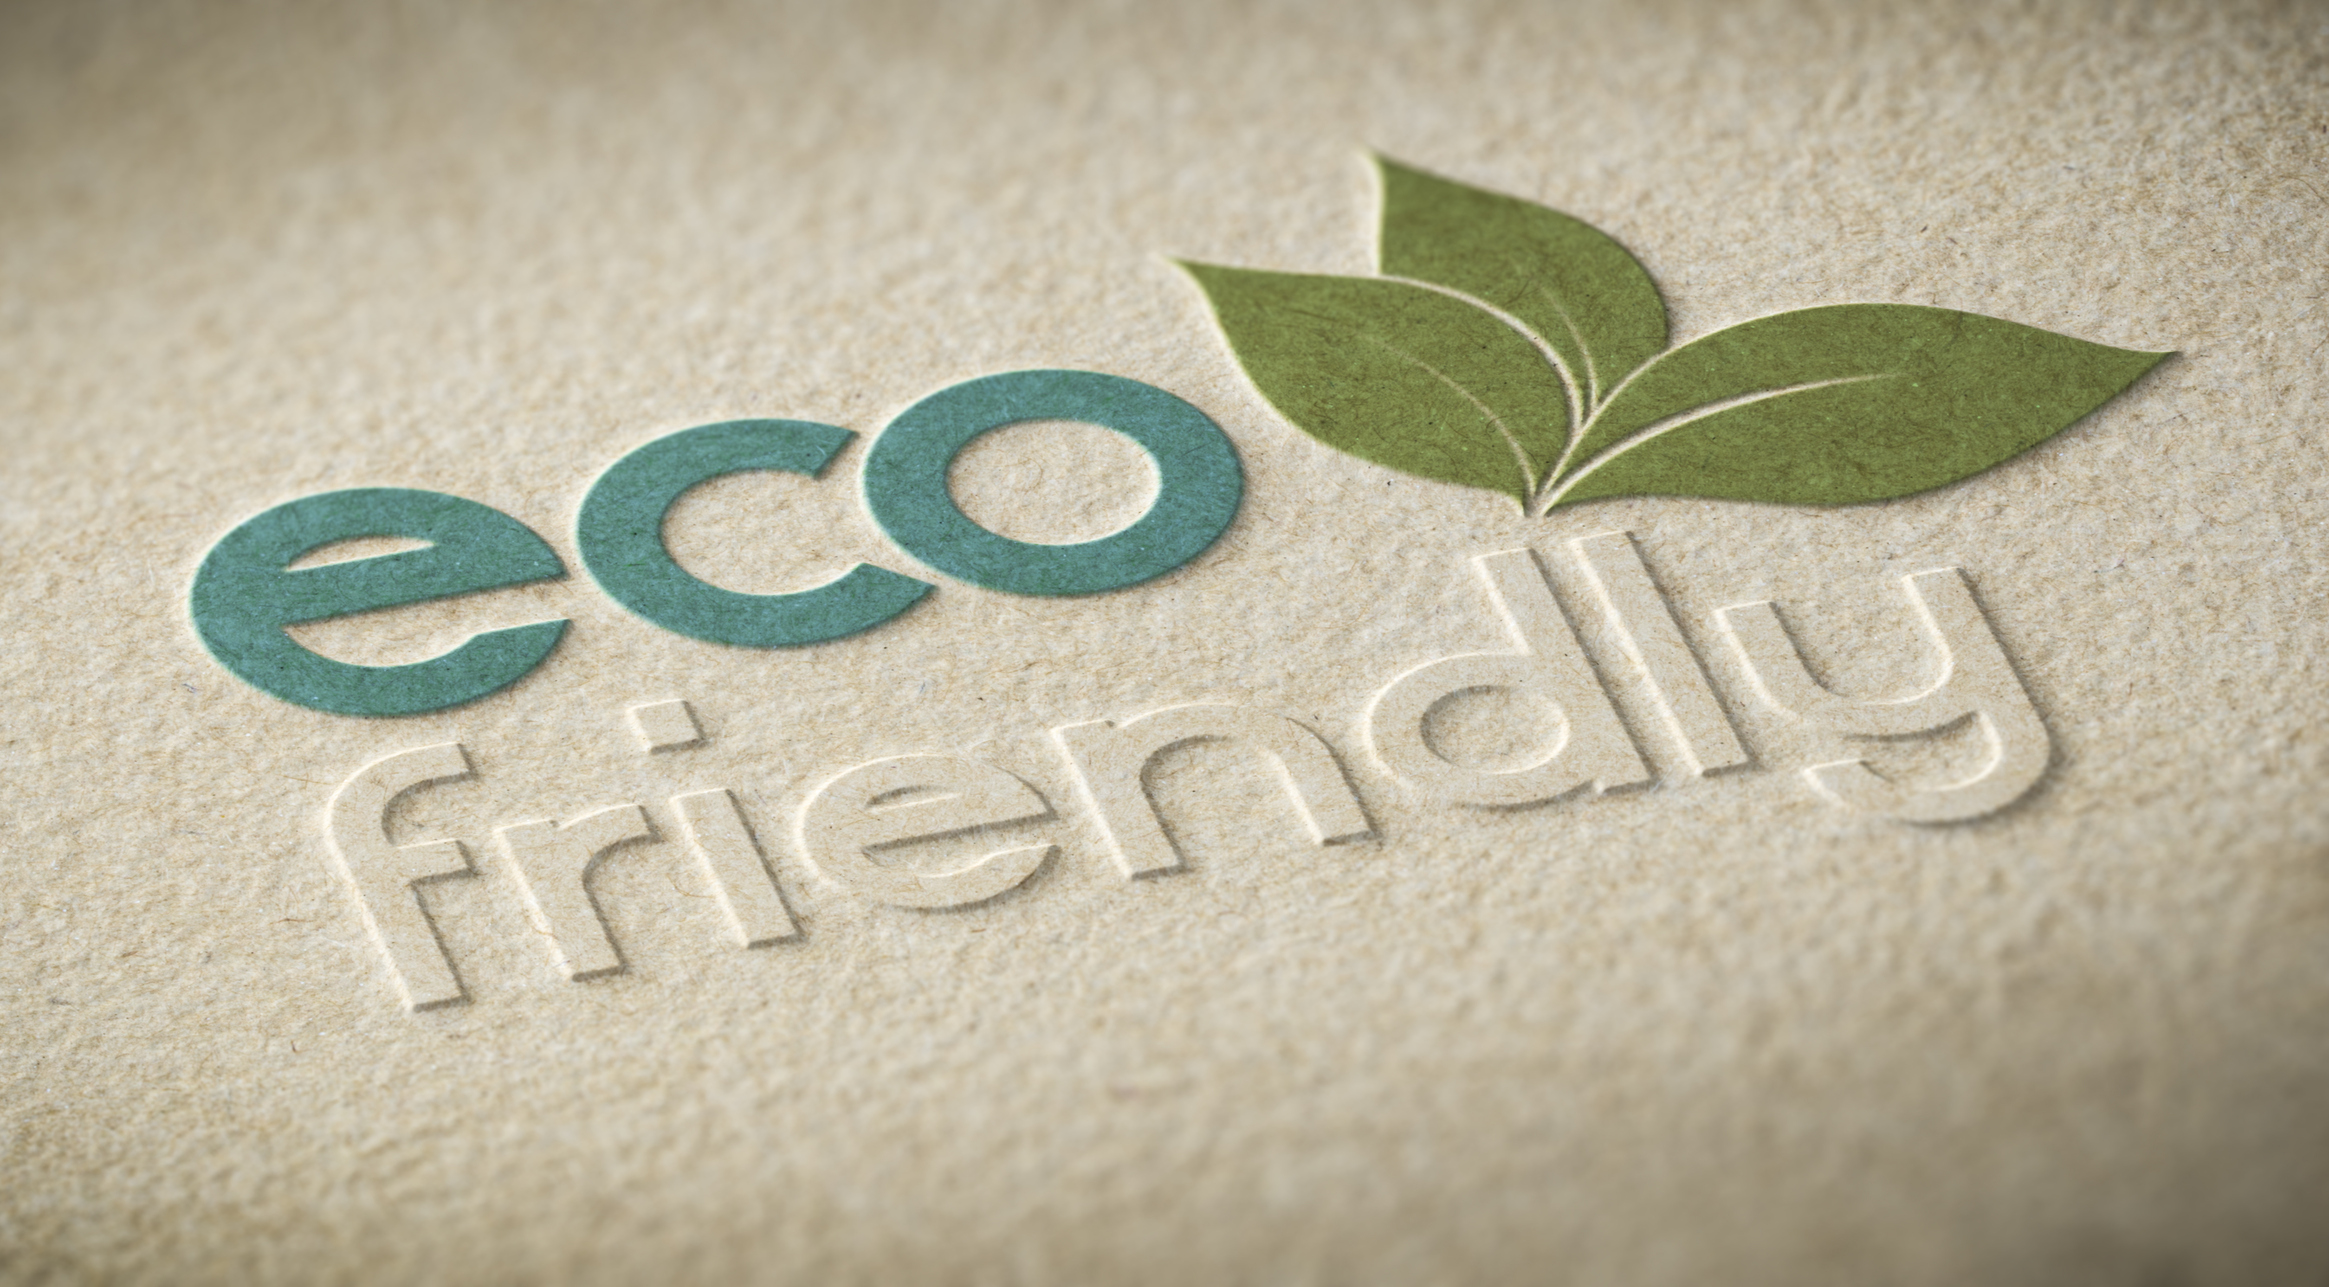 Eco certification